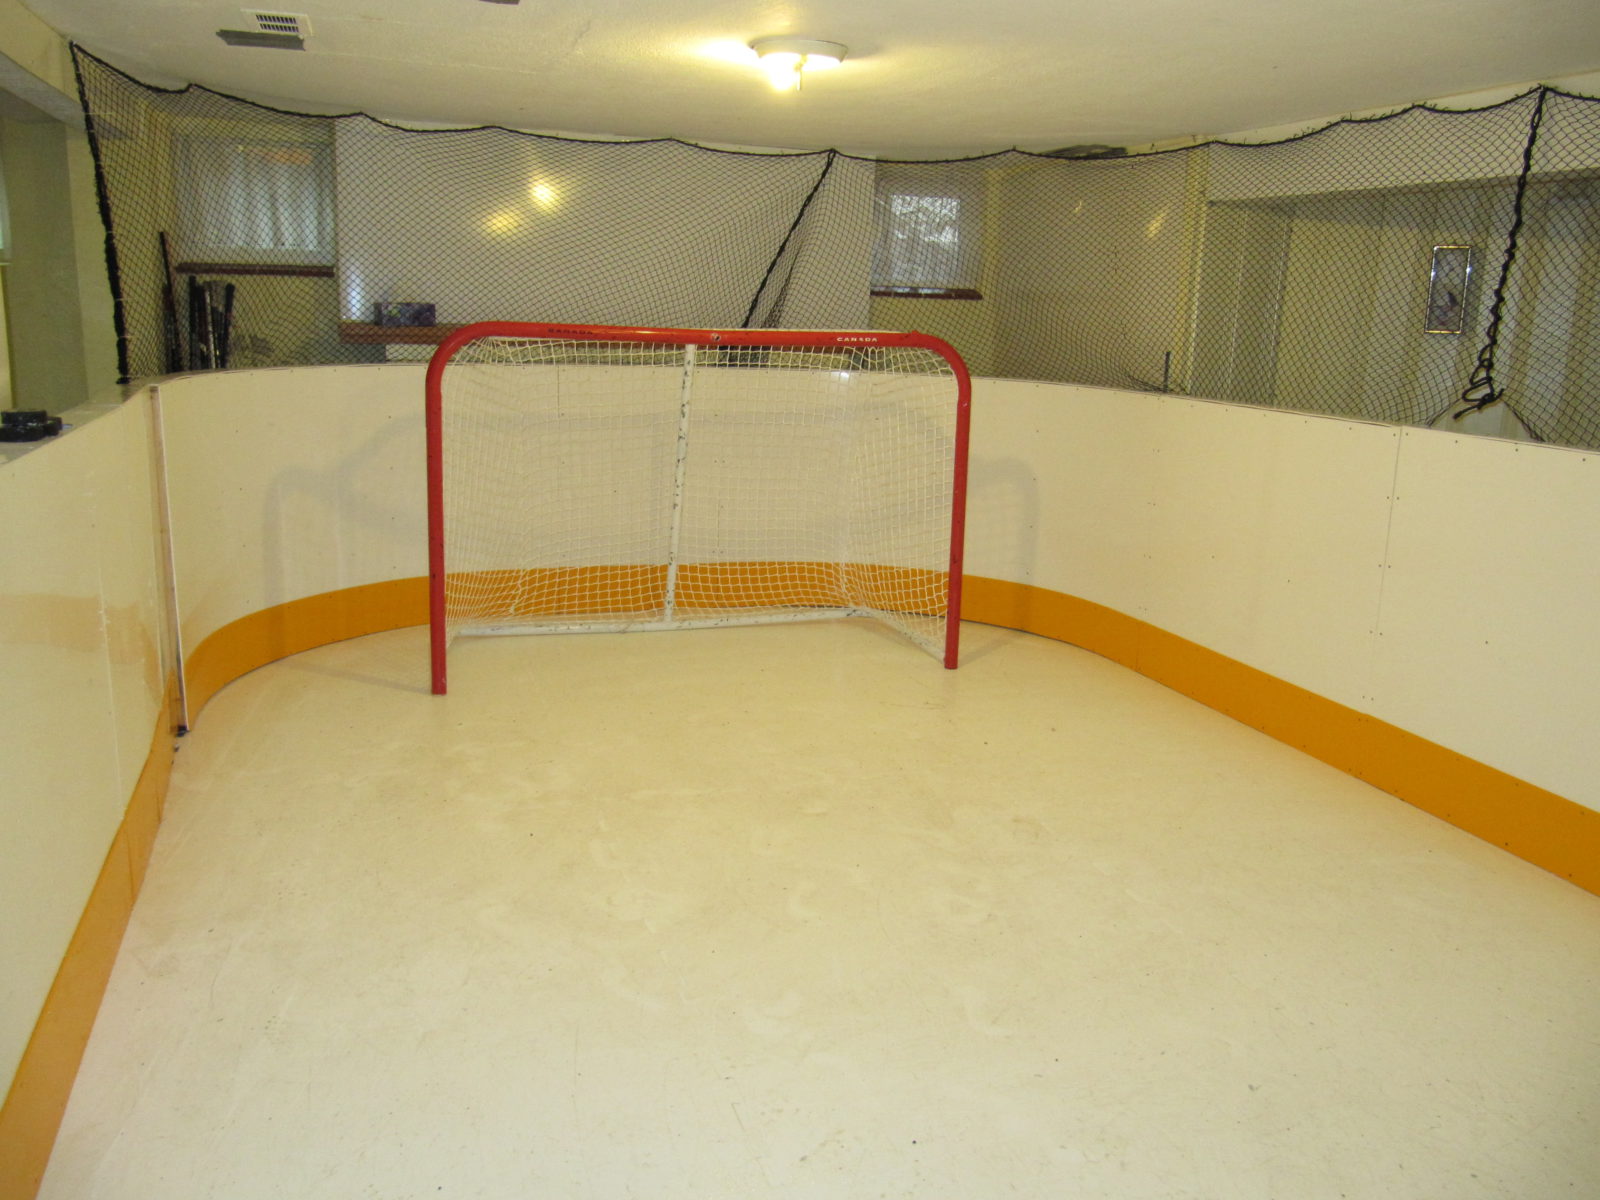 Basement synthetic ice rink